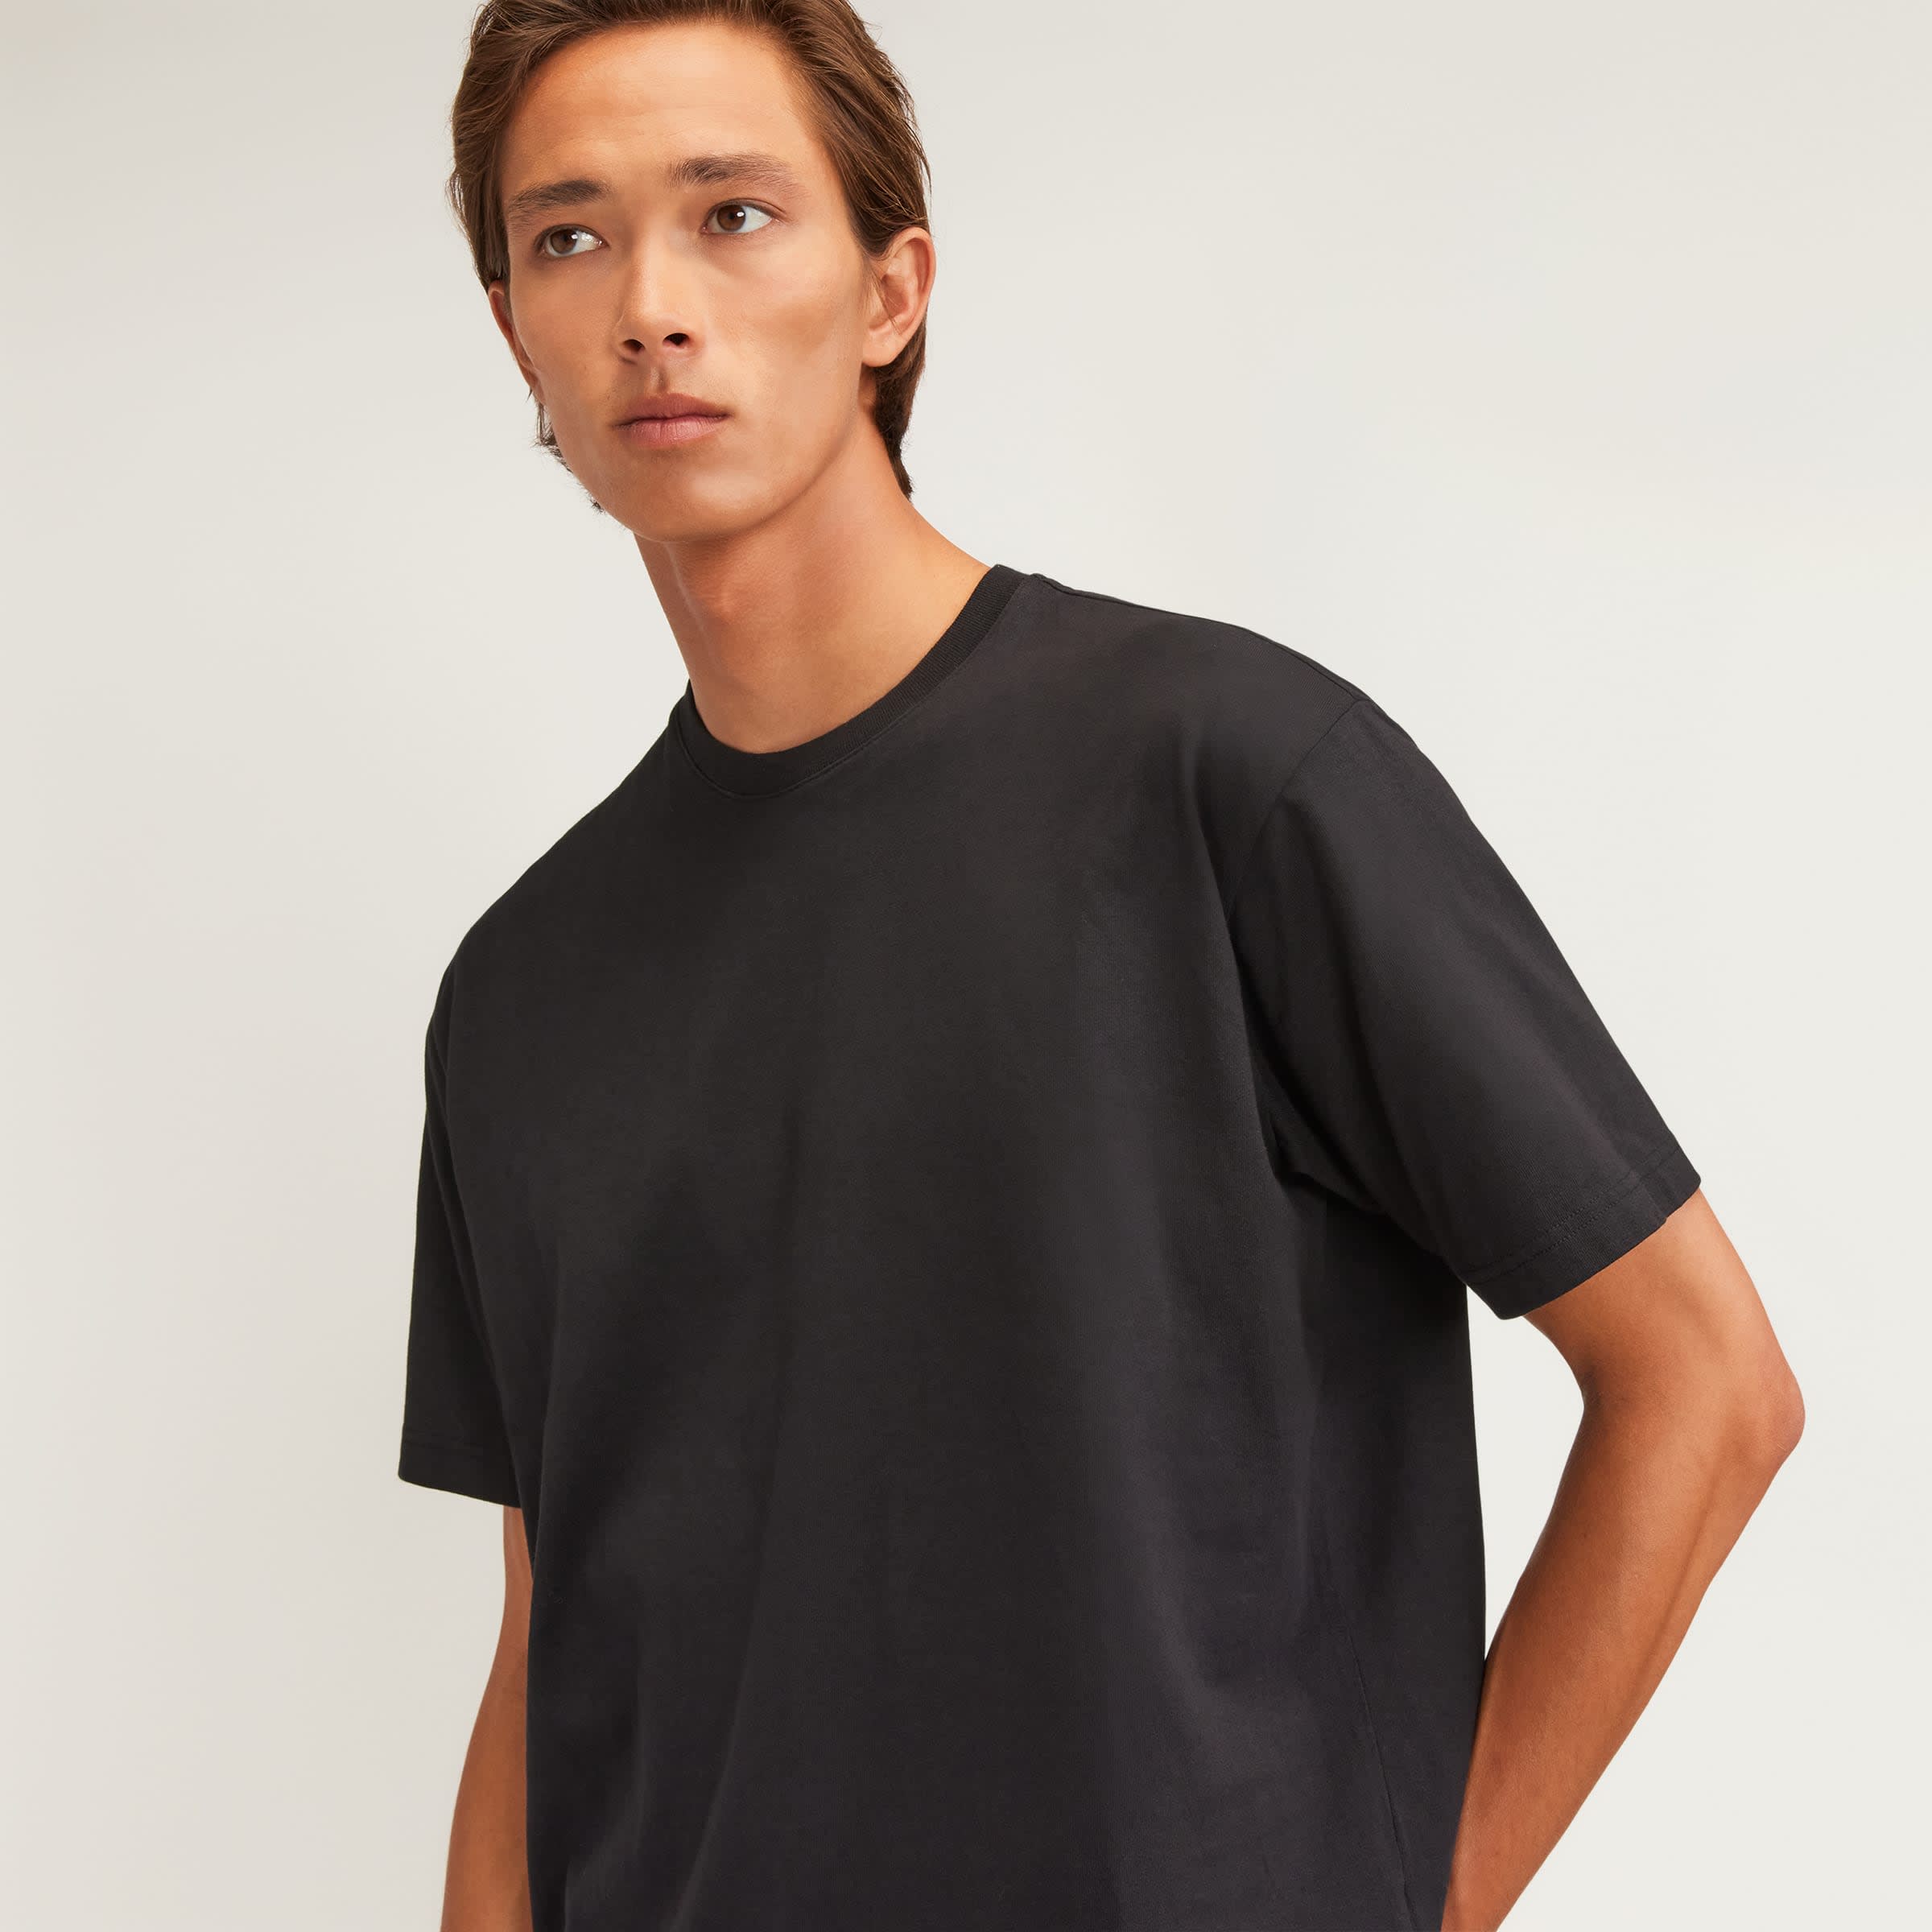 Everlane Men's Premium-Weight Crew Neck | Uniform T-Shirt in Black, Size Medium